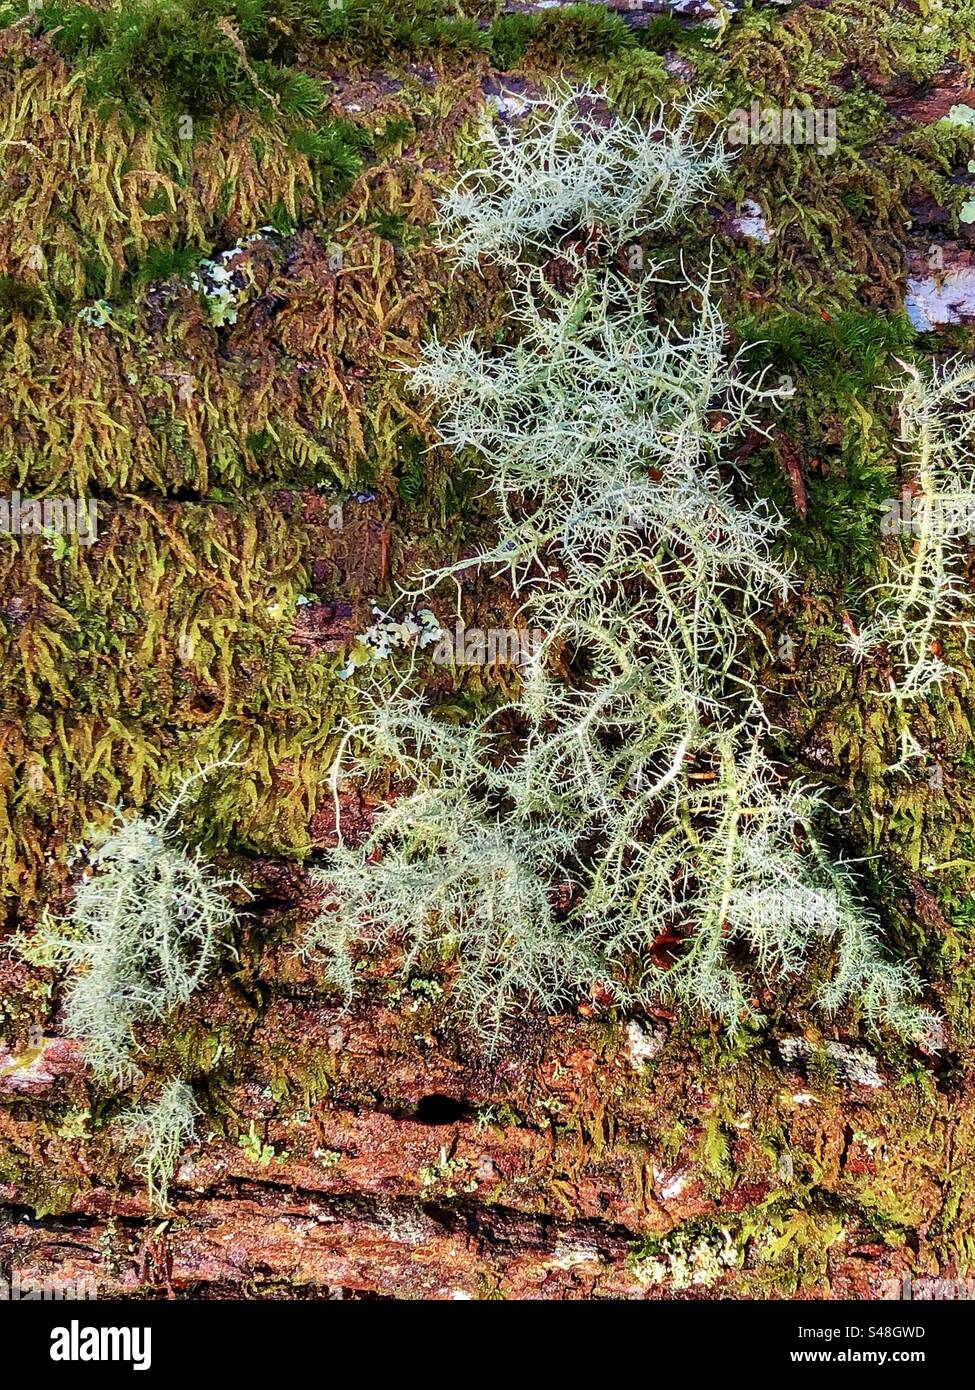 Beard lichen growing on a fallen oak tree at King's Hat, Brockenhurst, New Forest National Park, Hampshire United Kingdom Stock Photo